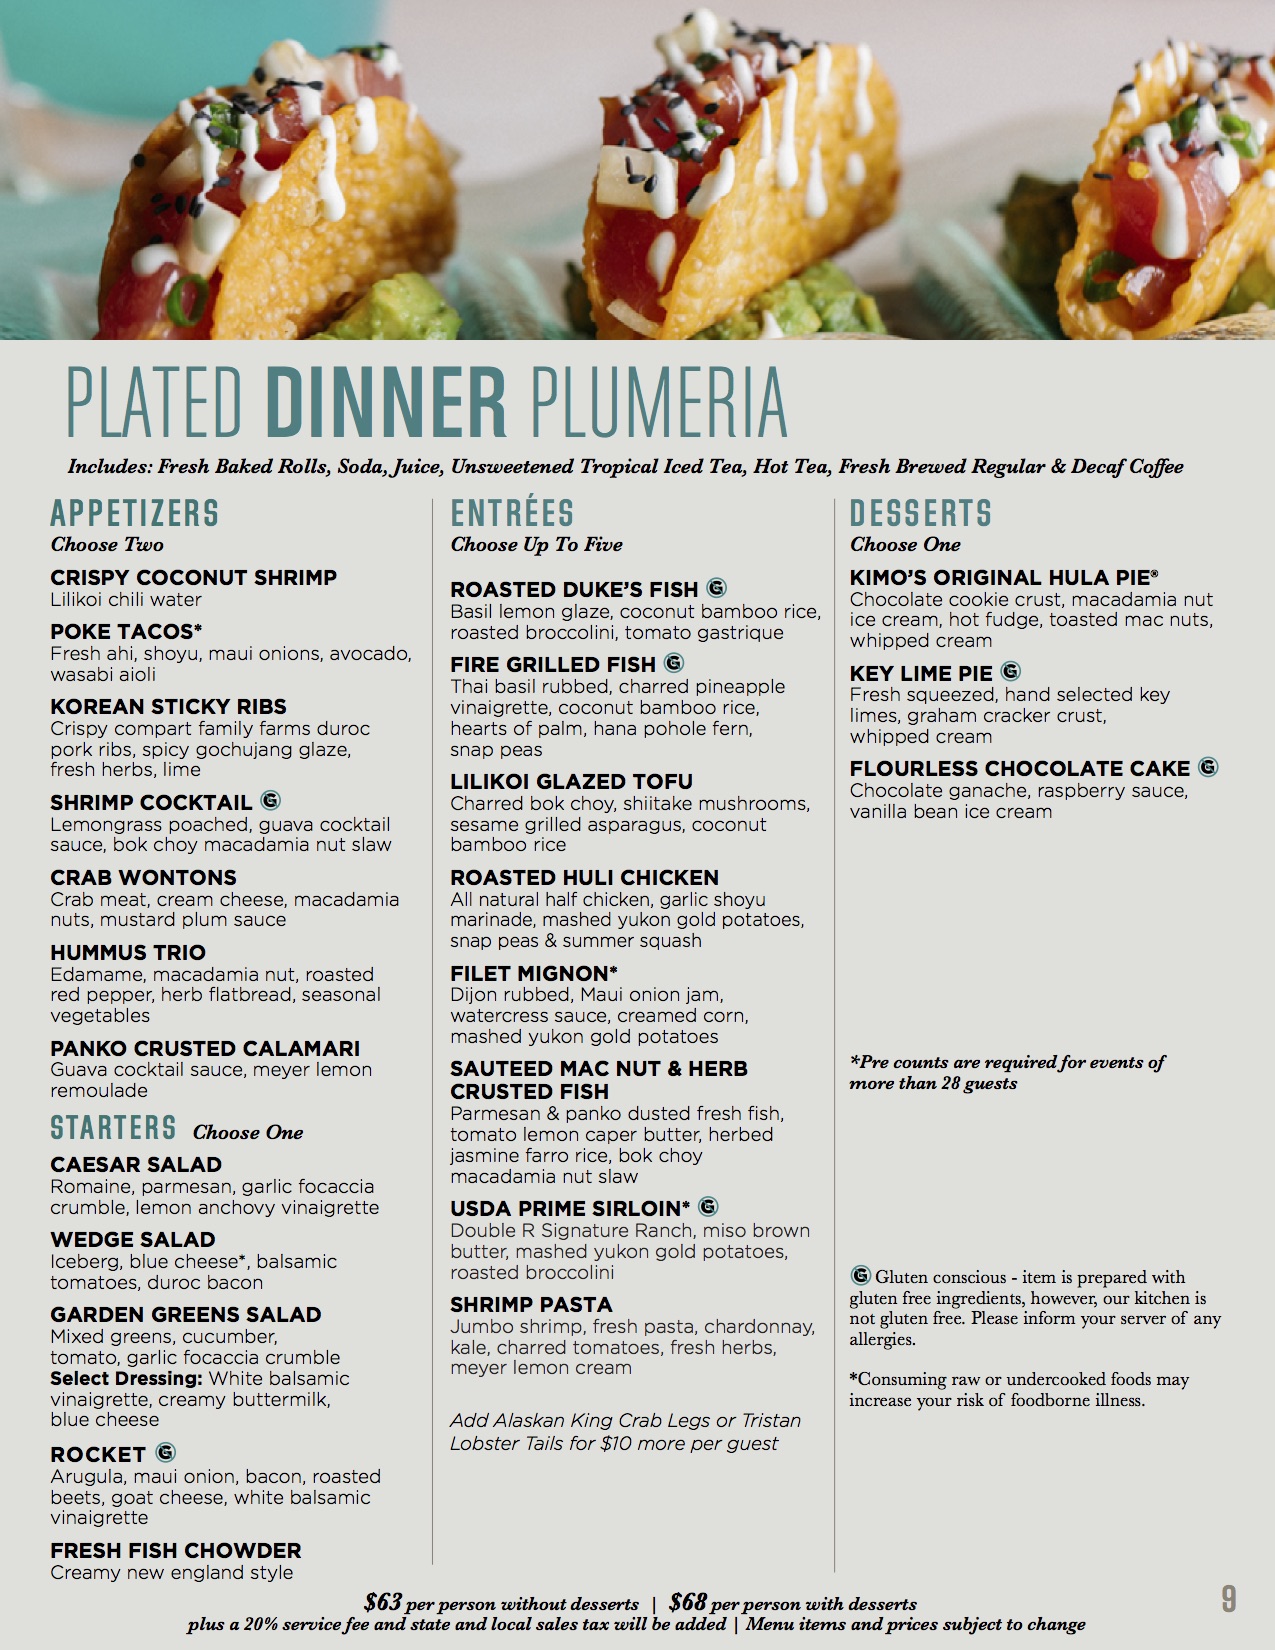 banquet menu - plate dinner plumeria